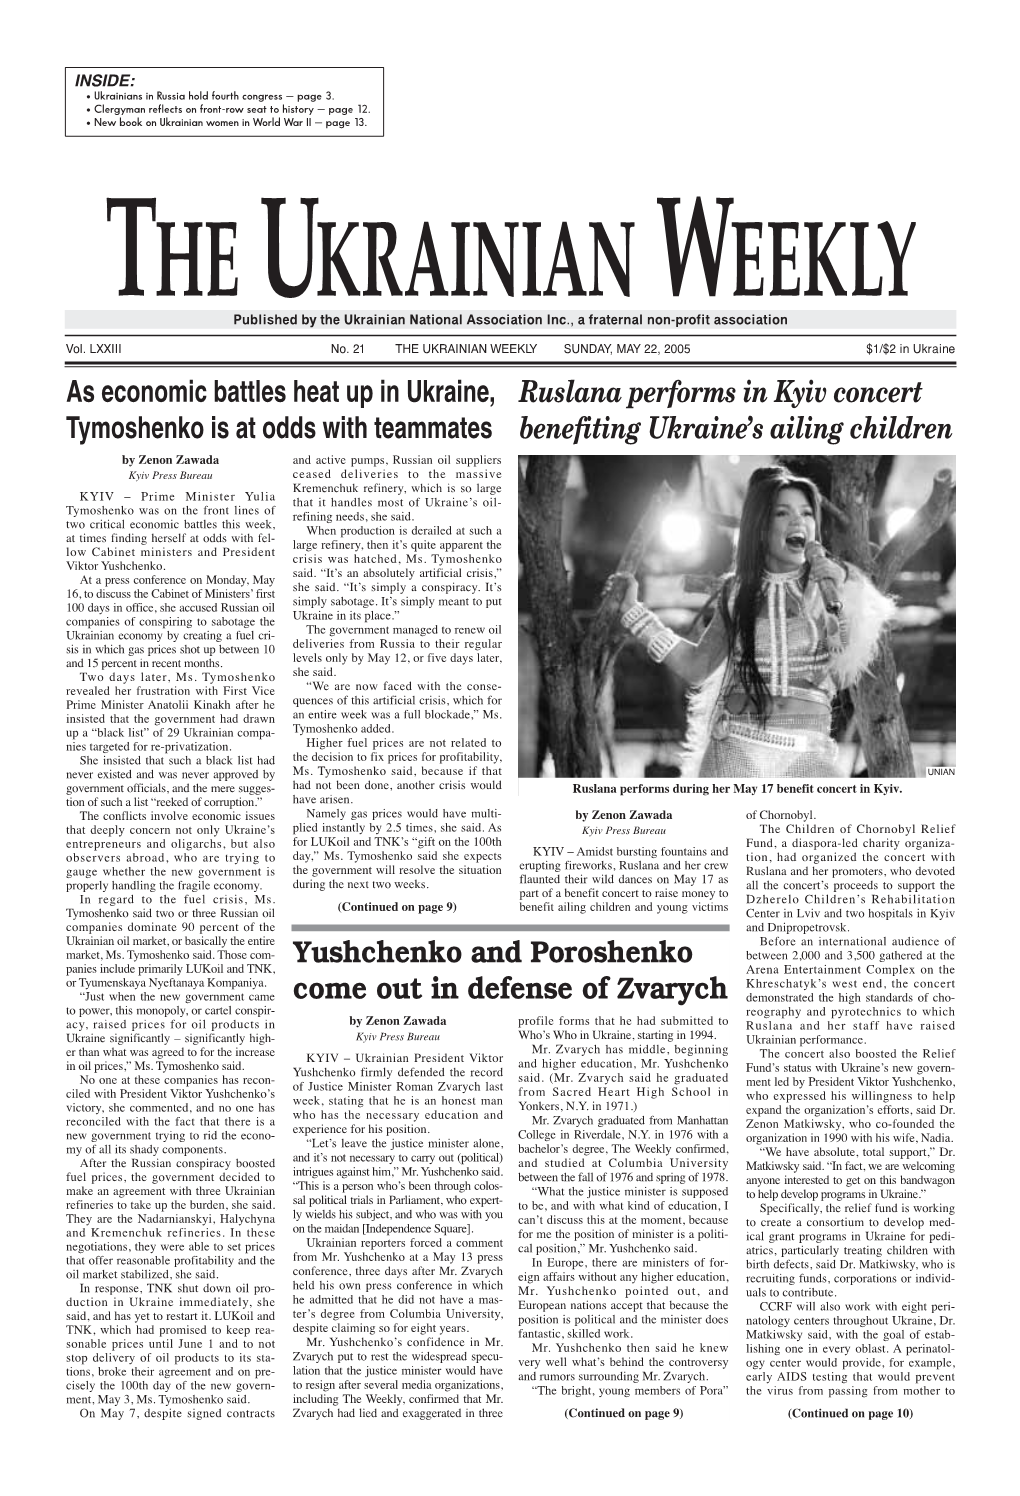 The Ukrainian Weekly 2005, No.21